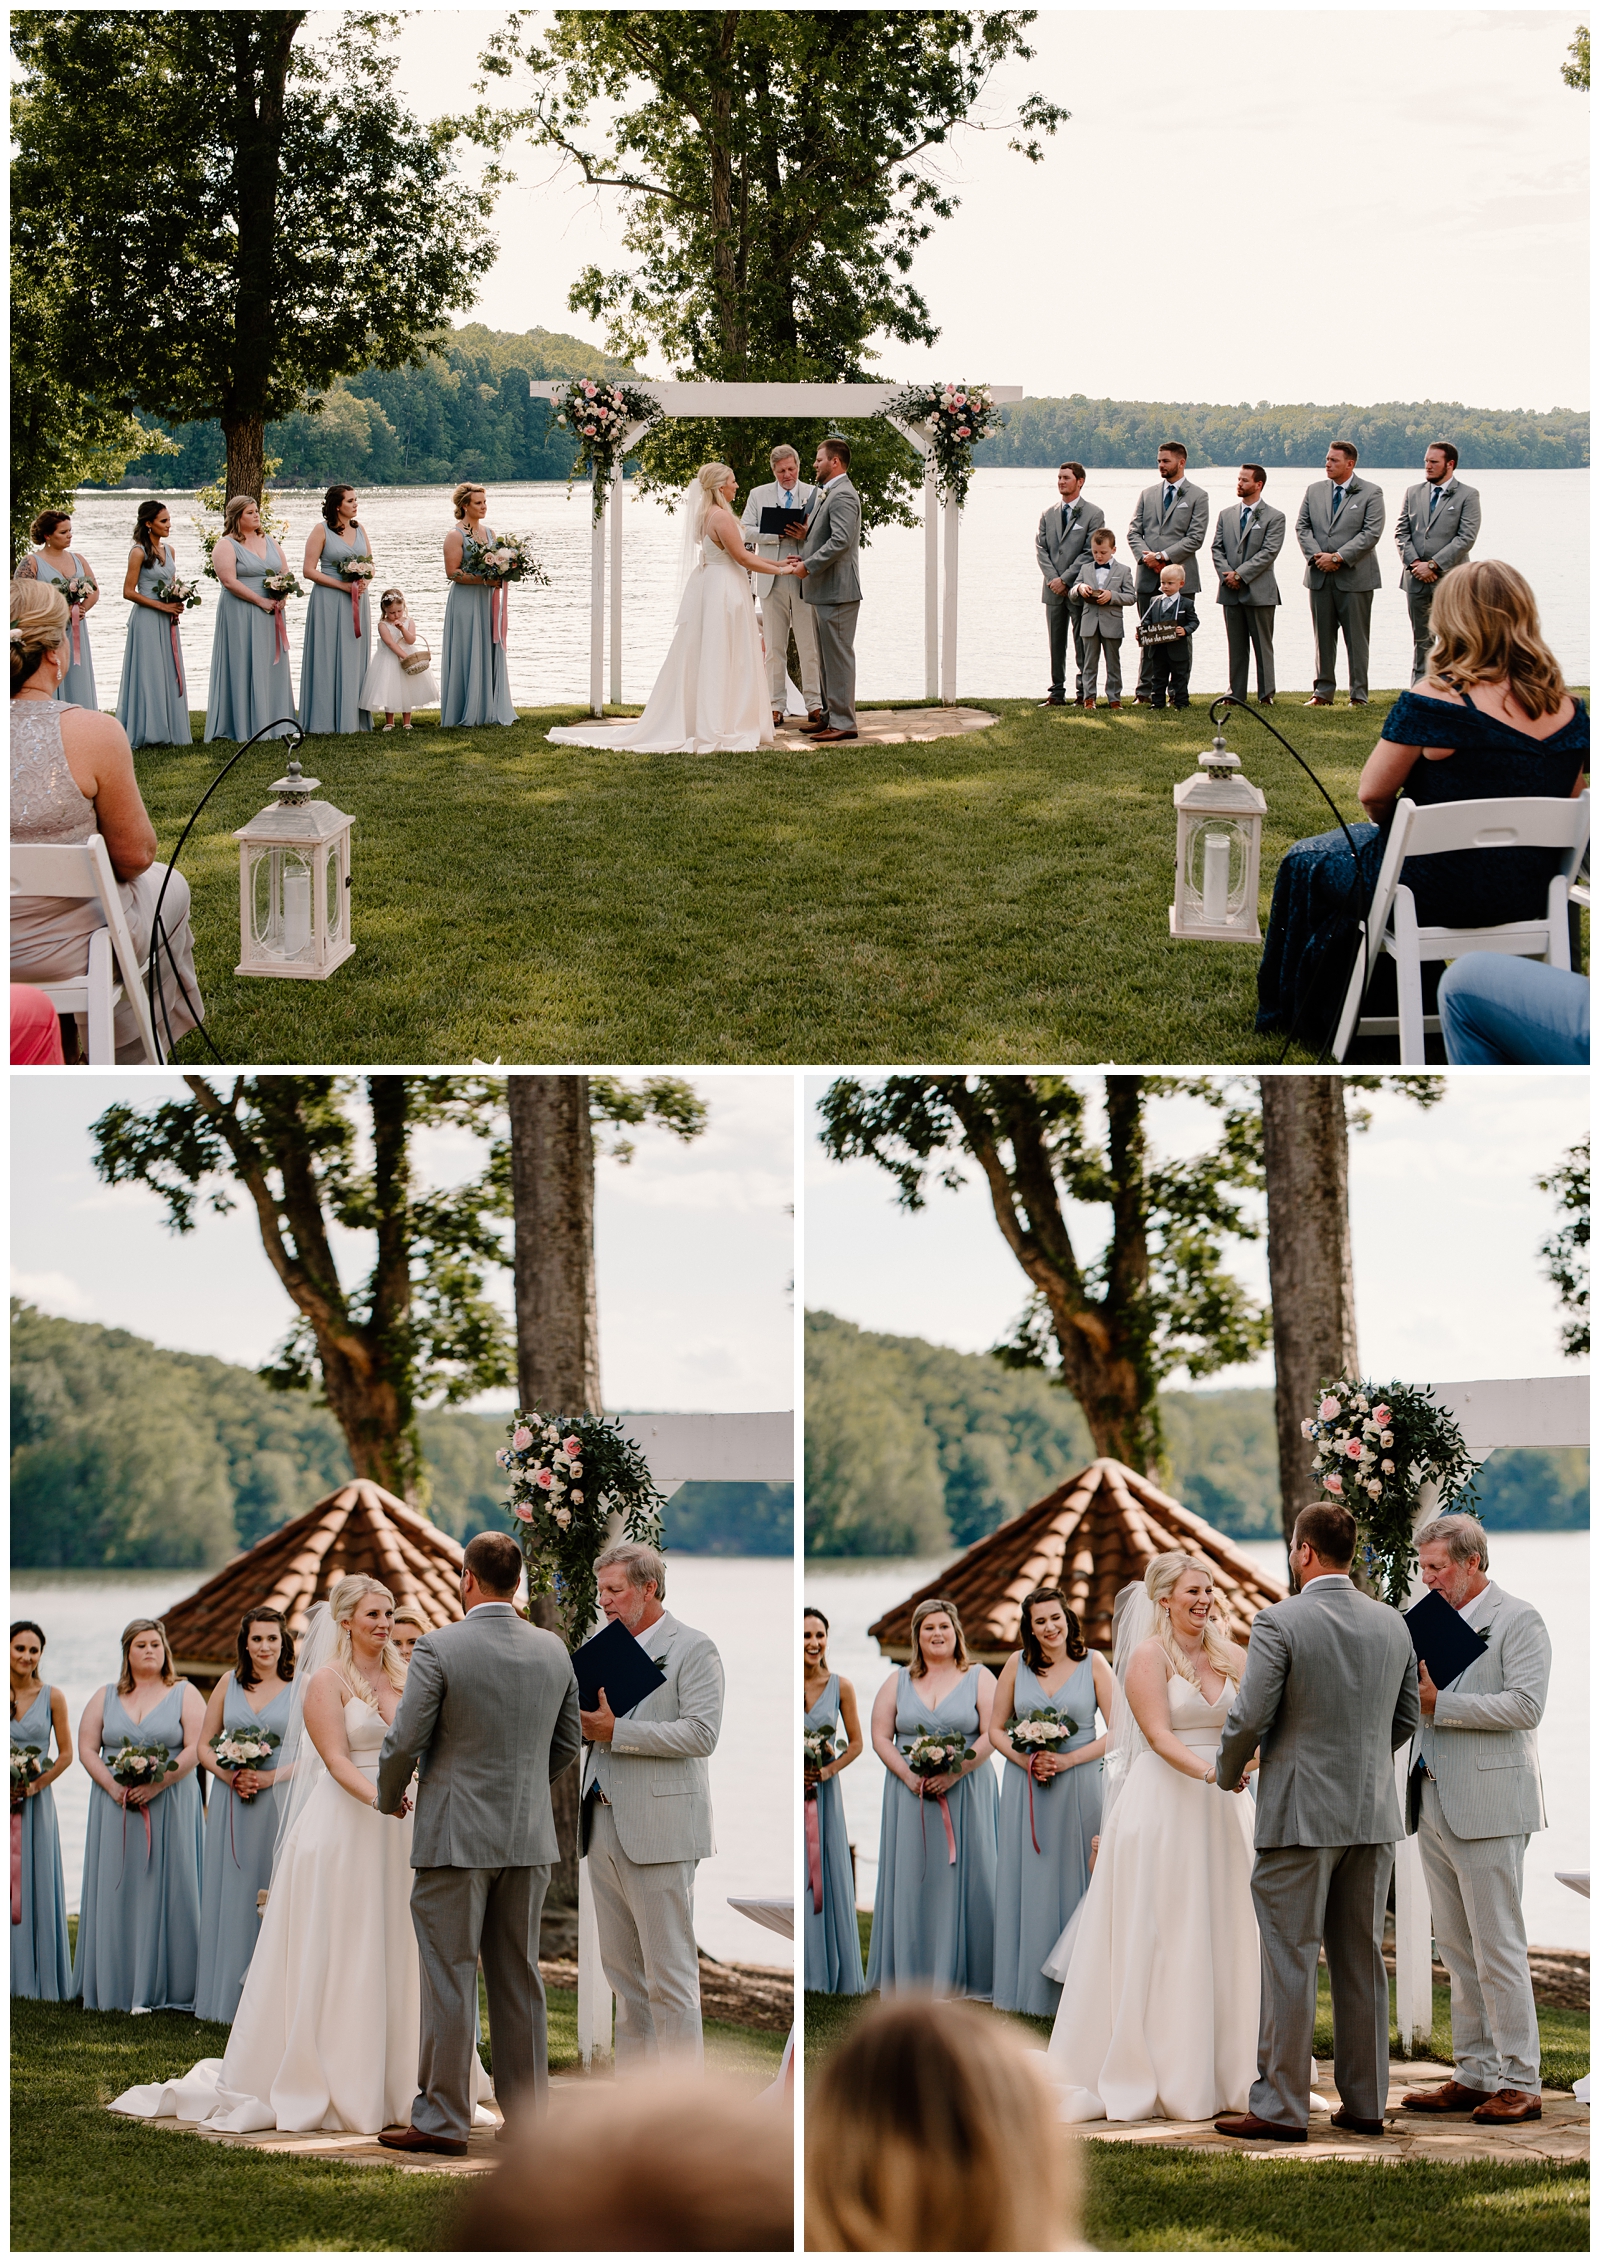 Southern lakeside wedding ceremony at Bella Collina by North Carolina photographer